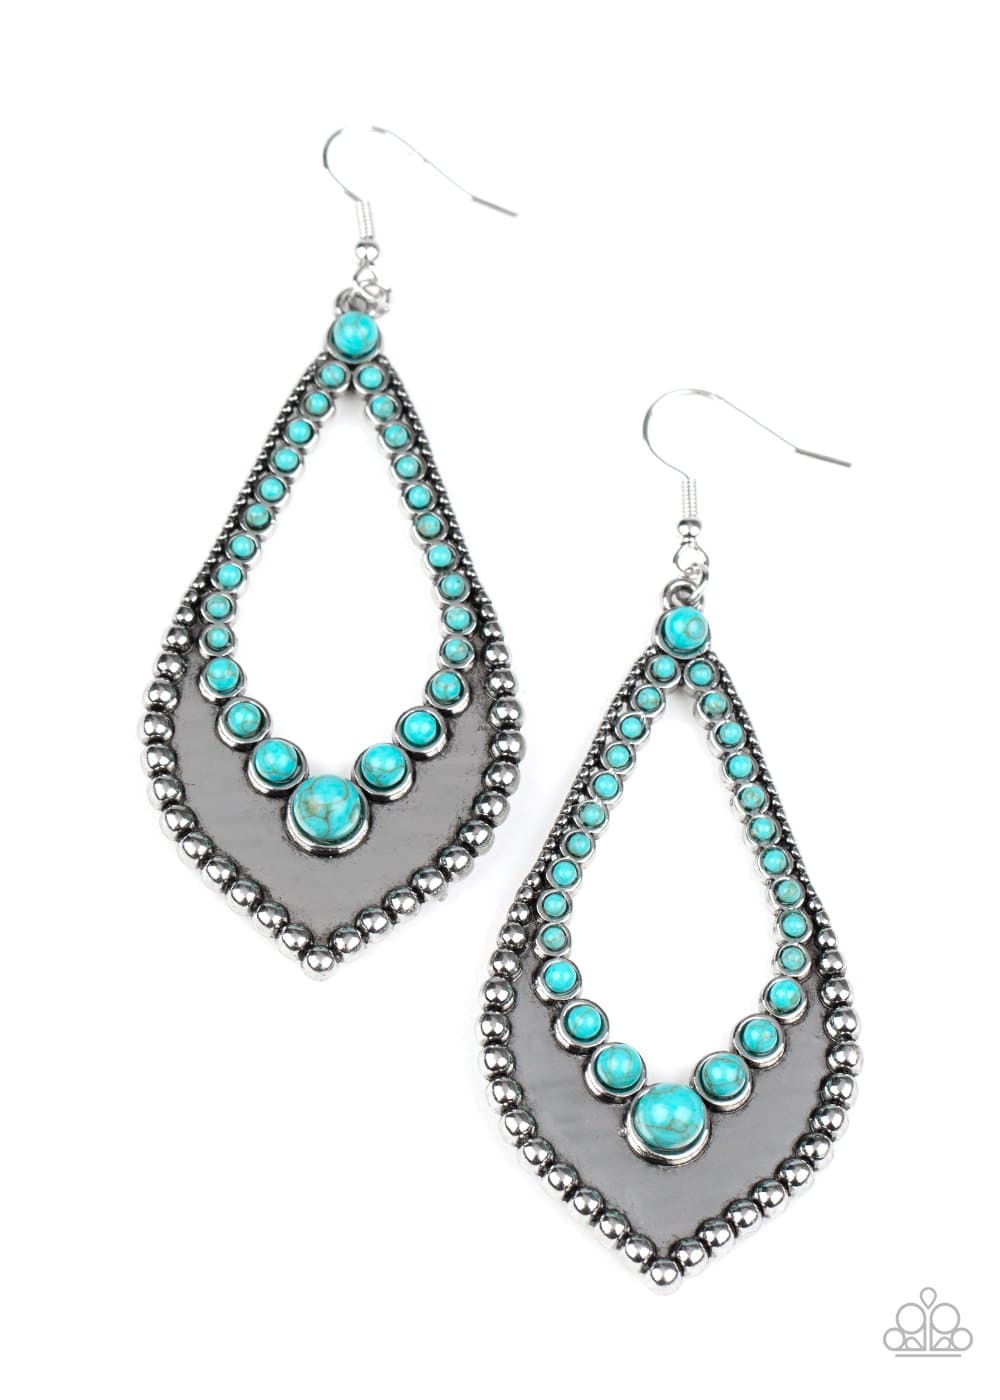 Essential Minerals - Blue Turquoise Teardrop Earrings - Paparazzi Accessories - GlaMarous Titi Jewels